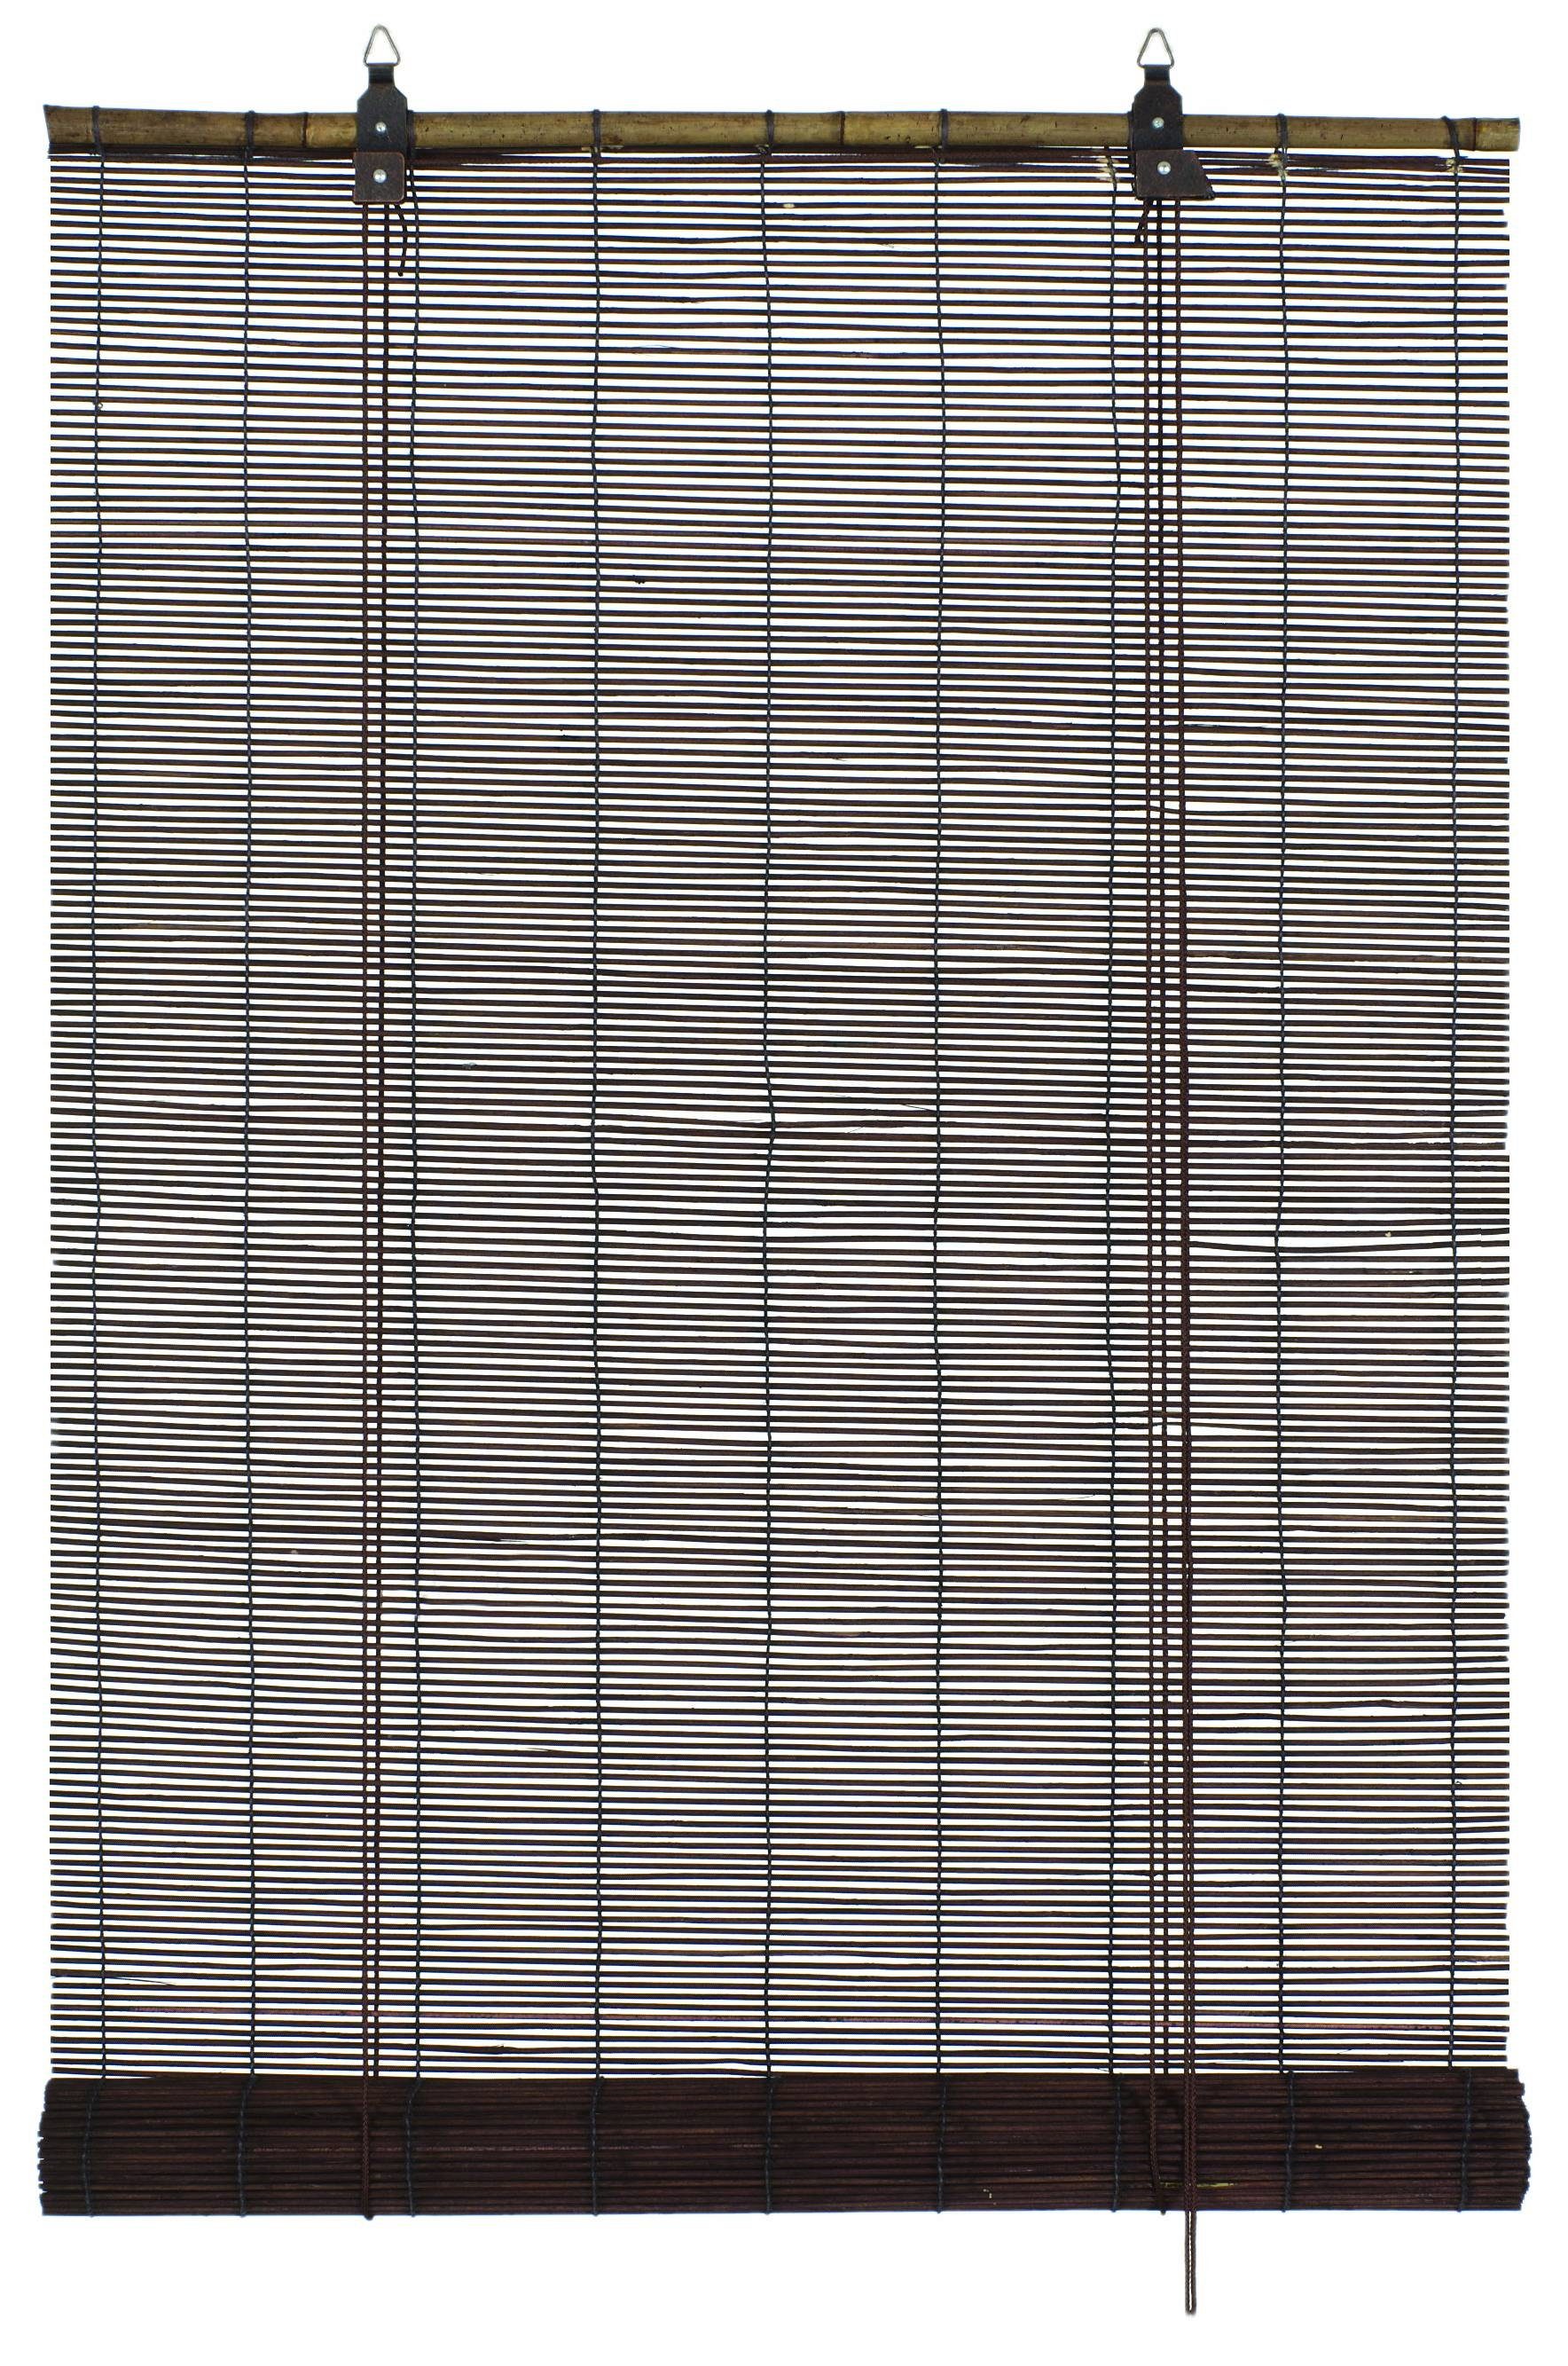 Rollo Gardinia Bambus-Rollo schoko 90 x 220 cm, GARDINIA, Lichtschutz, standard